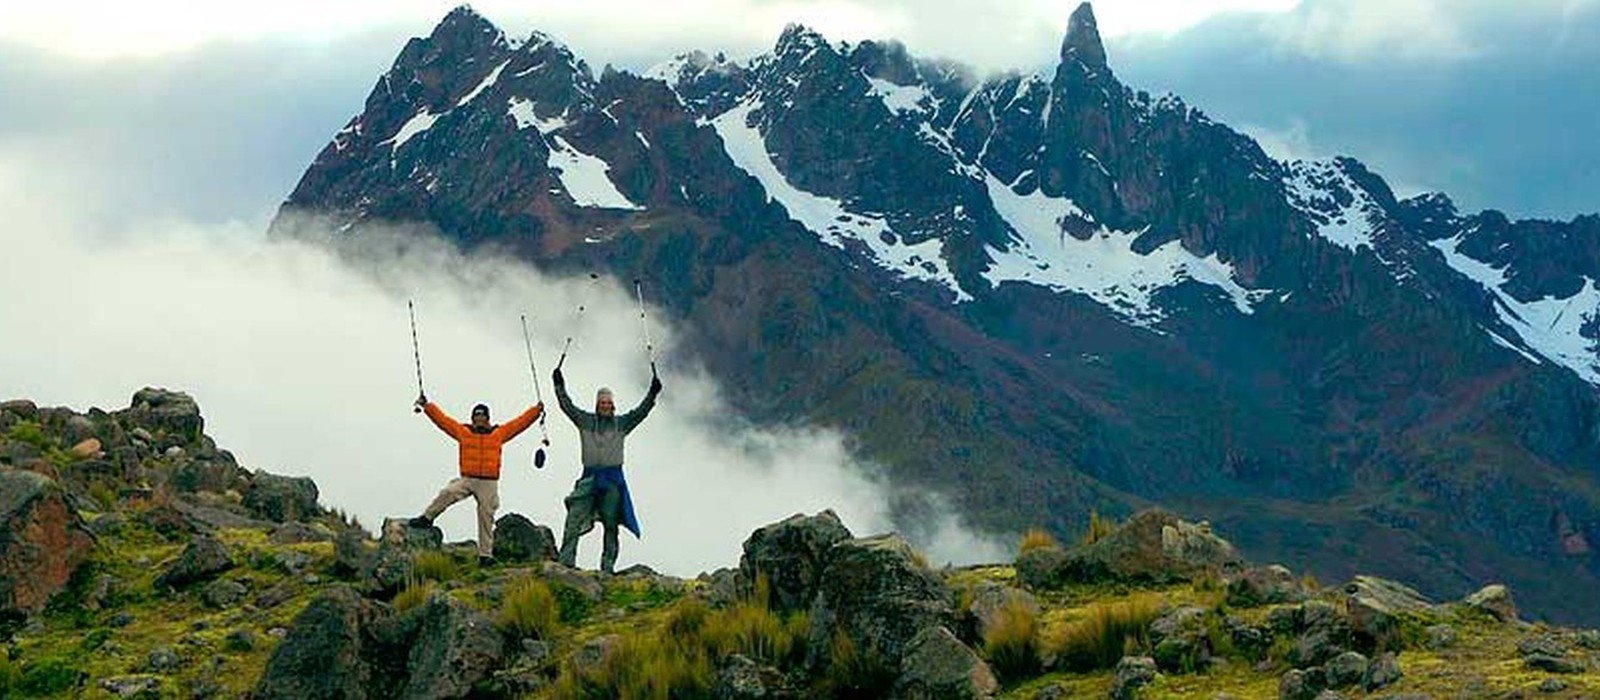 Moonstone Trek to Machu Picchu